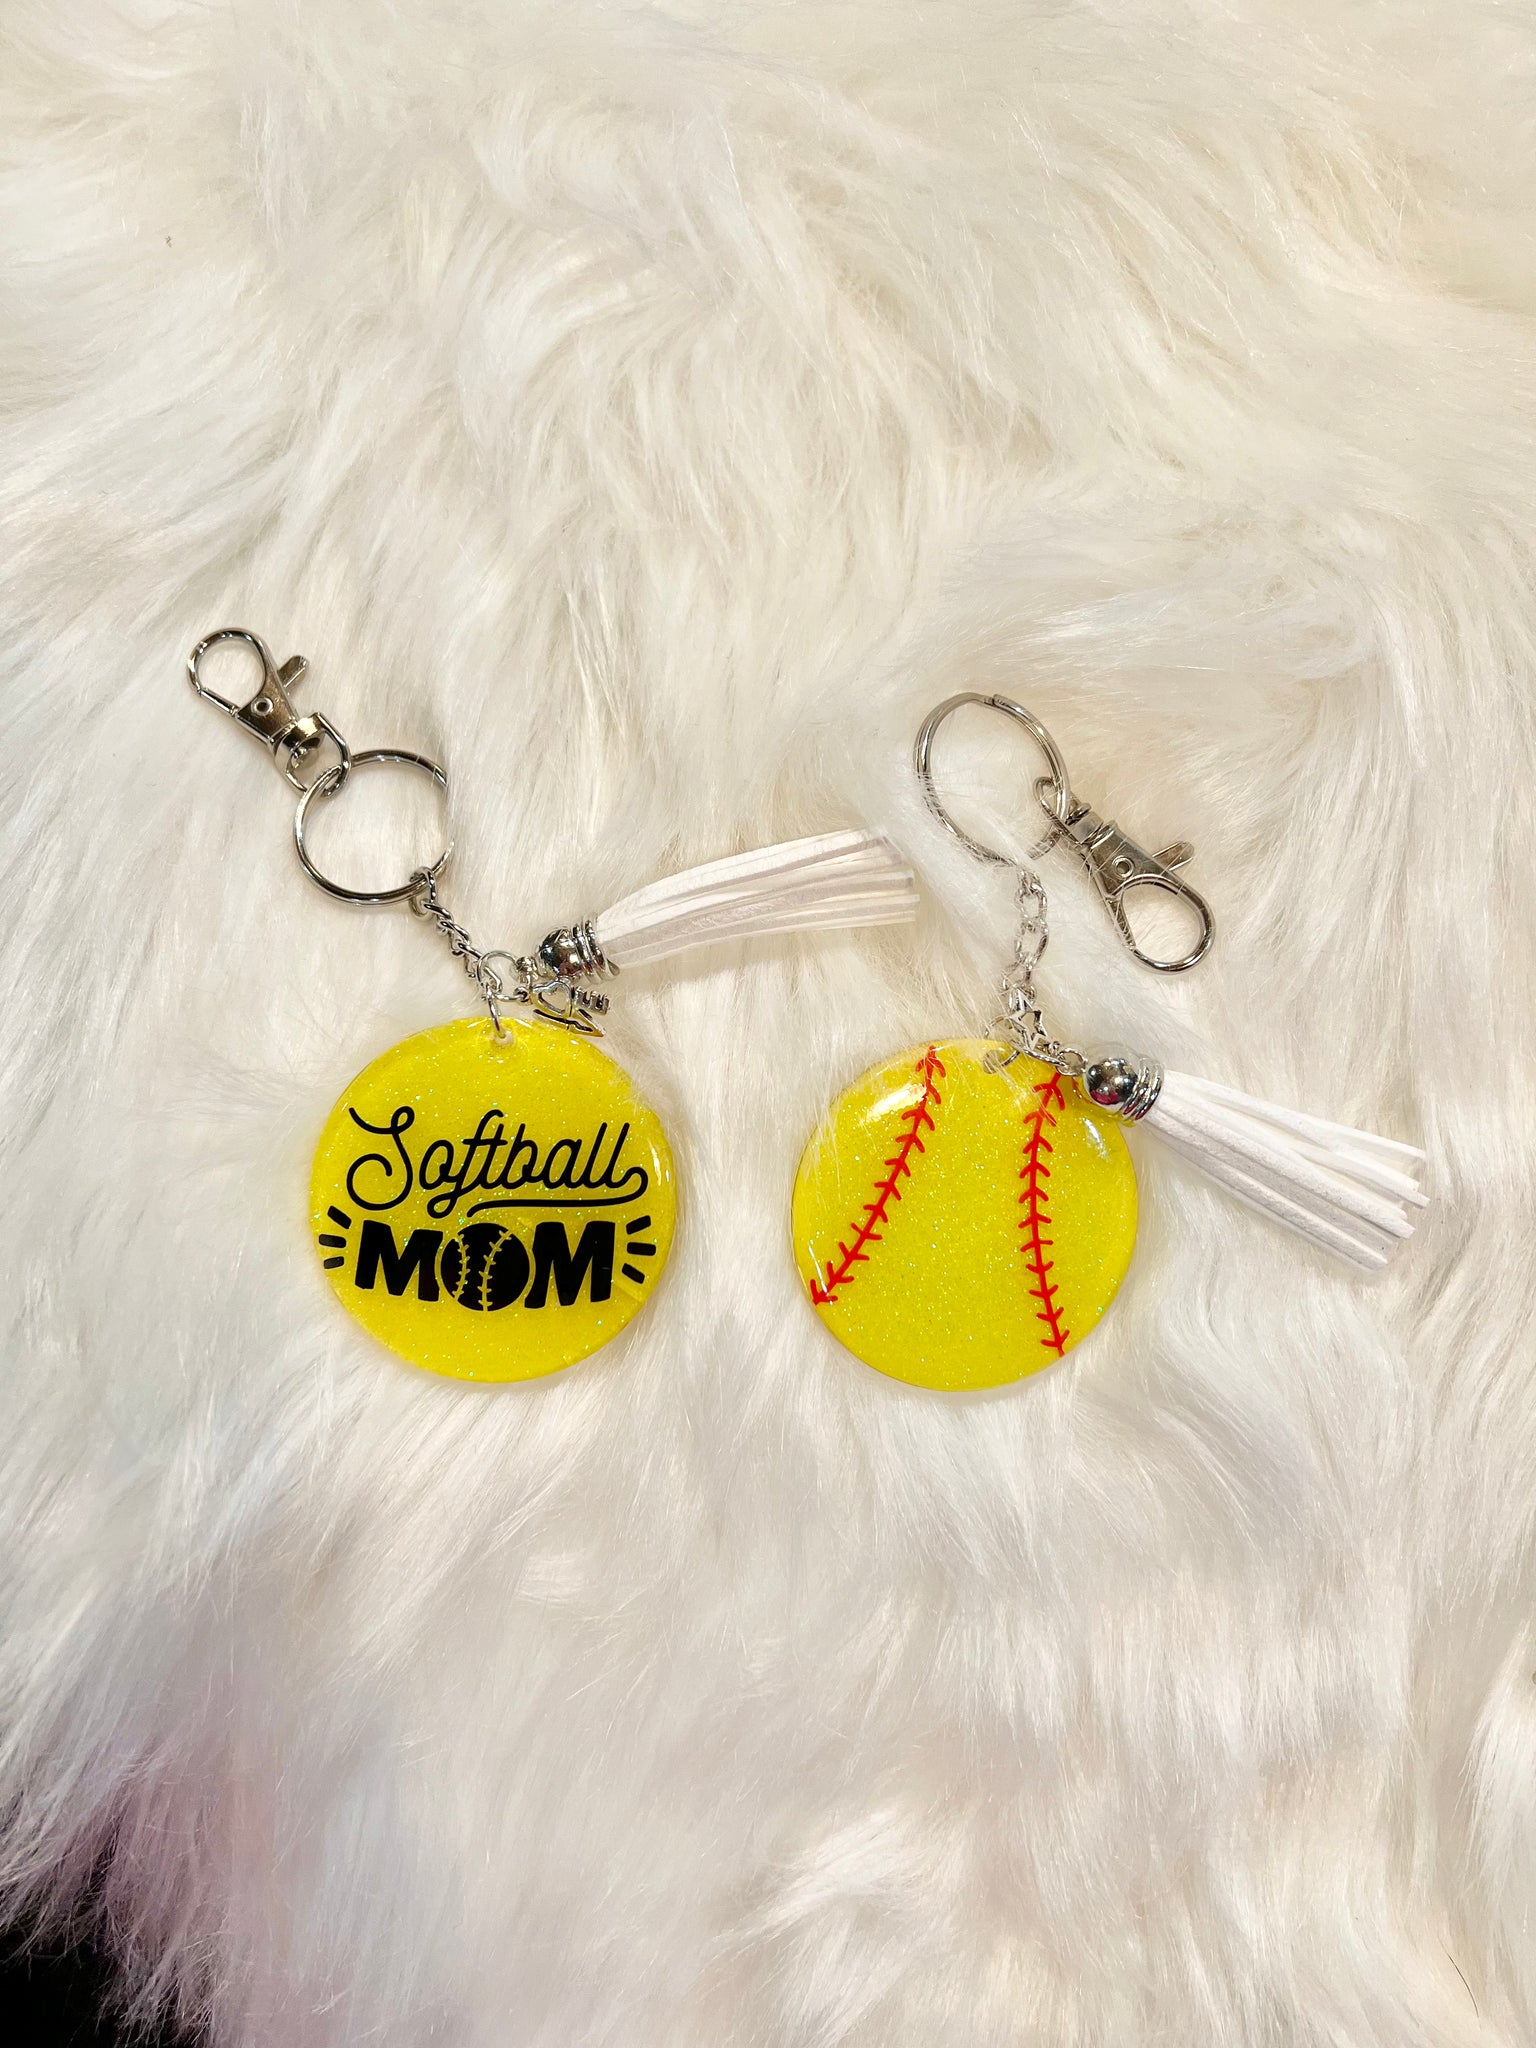 Softball mom keychain